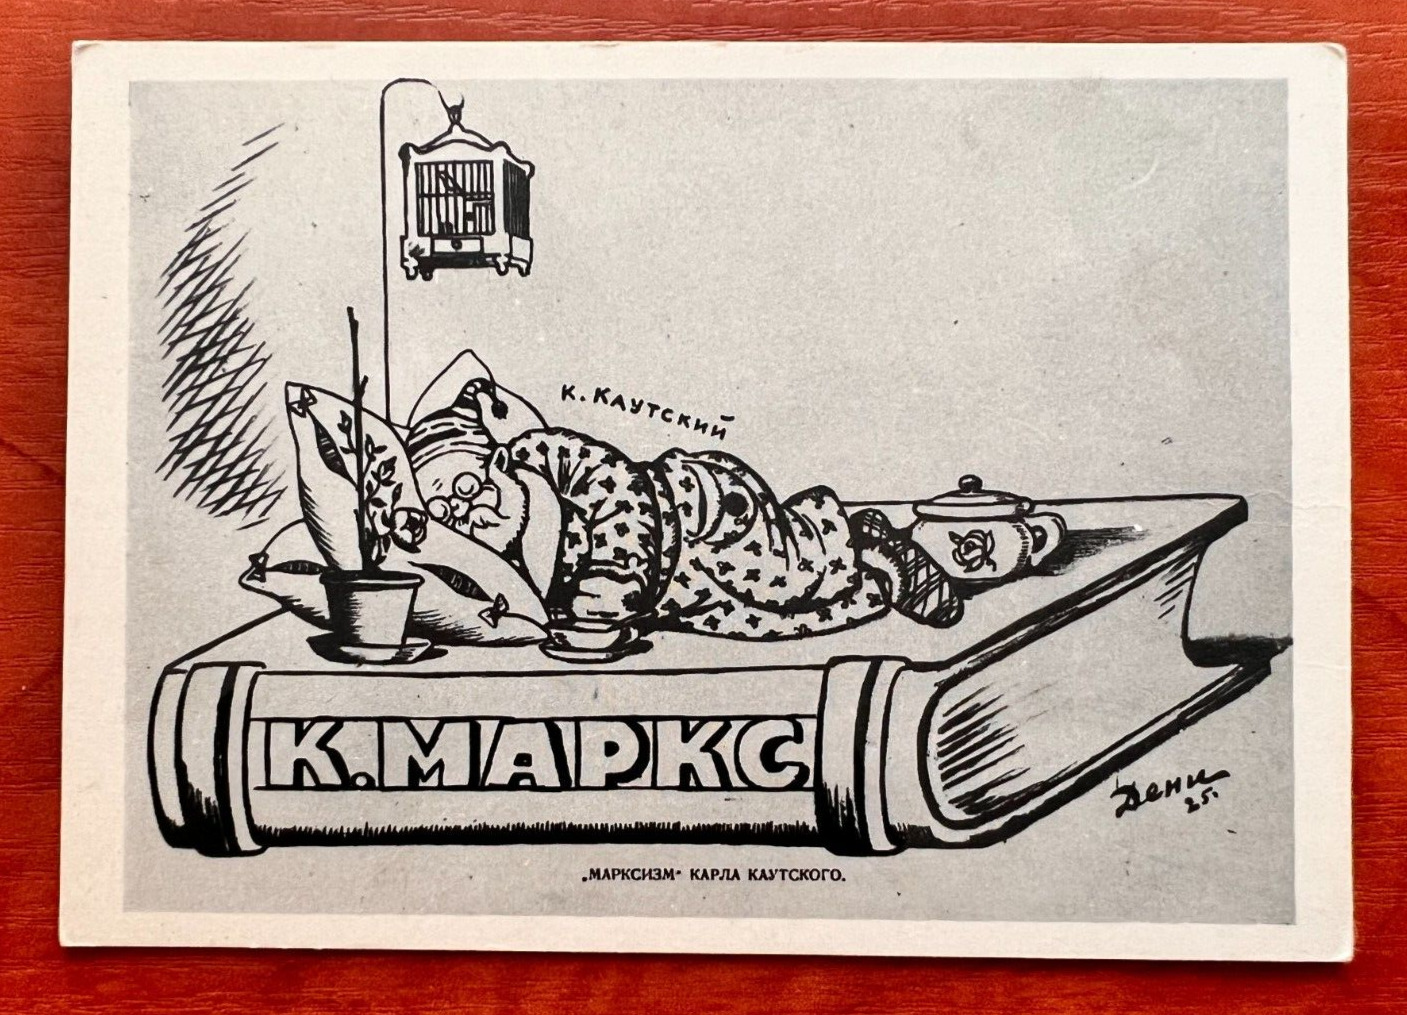 Soviet Postcards Propaganda Karl Marx Communism Slogan Soviet army Humor Policy